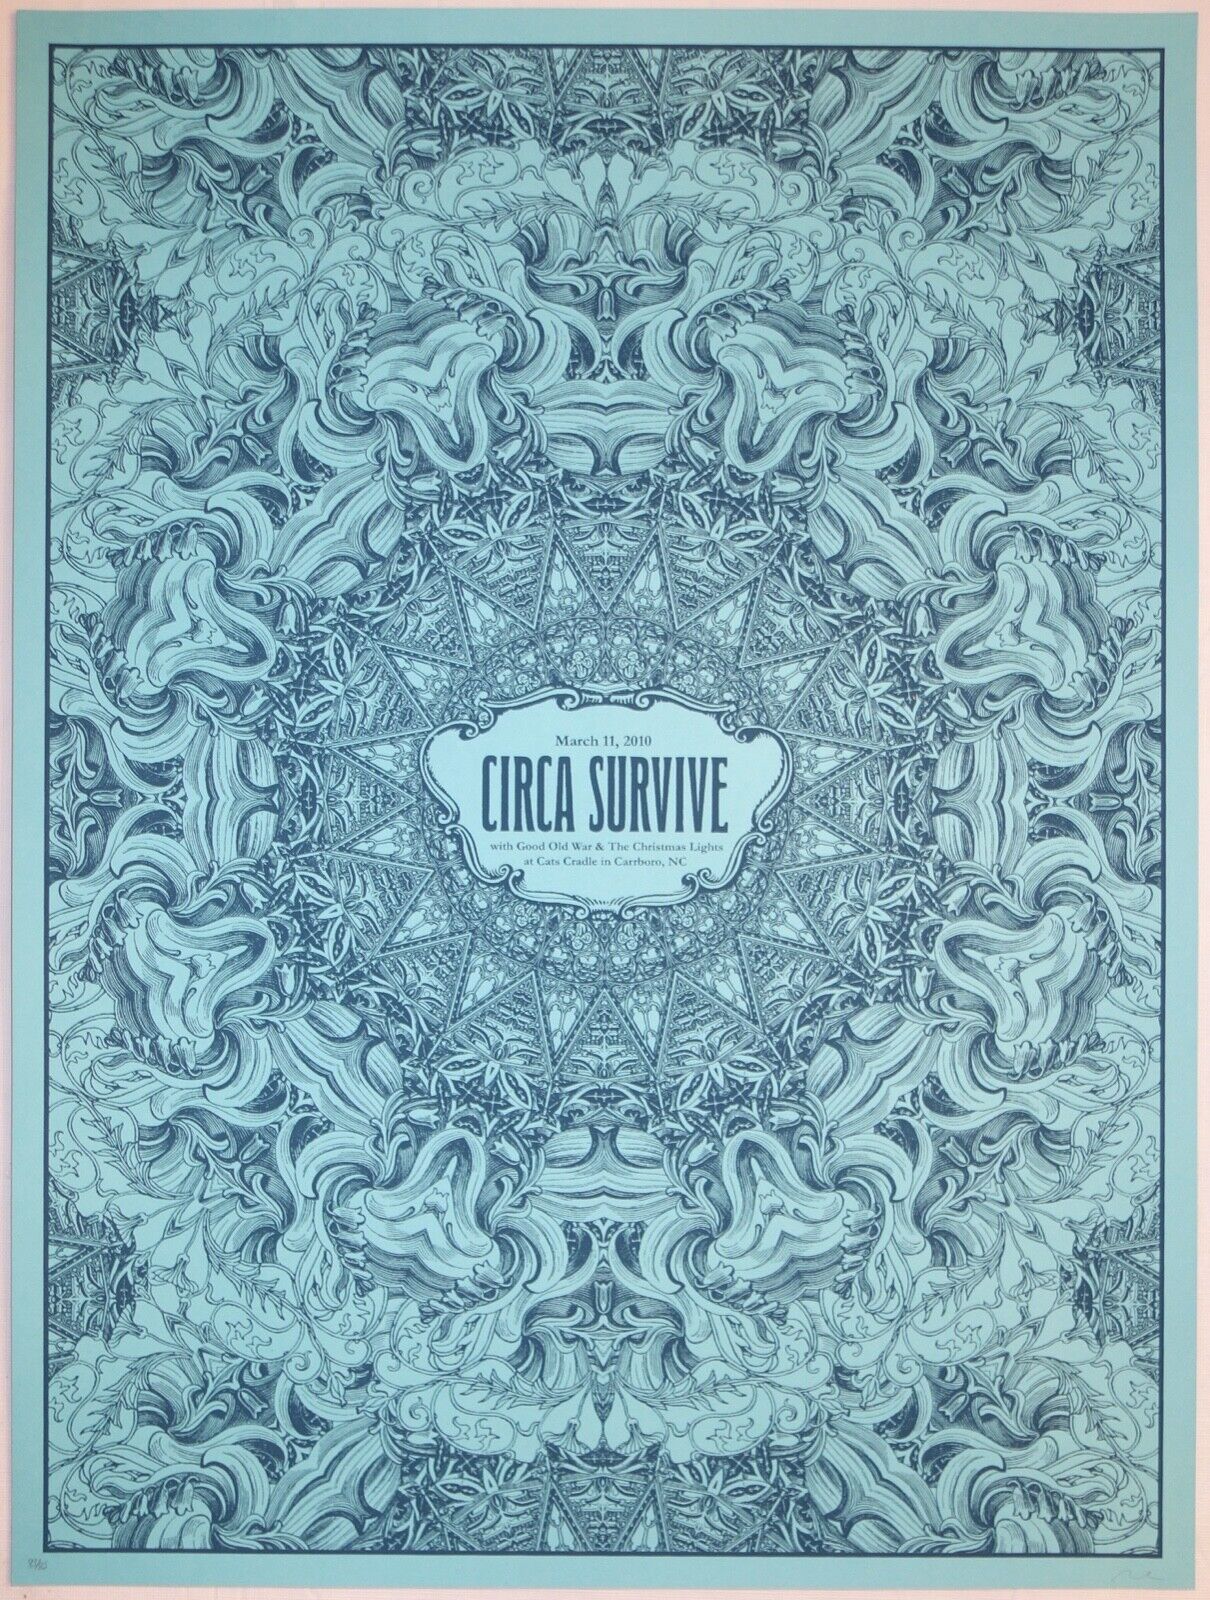 2010 Circa Survive - Carrboro Silkscreen Concert Poster s/n by Nate Duval